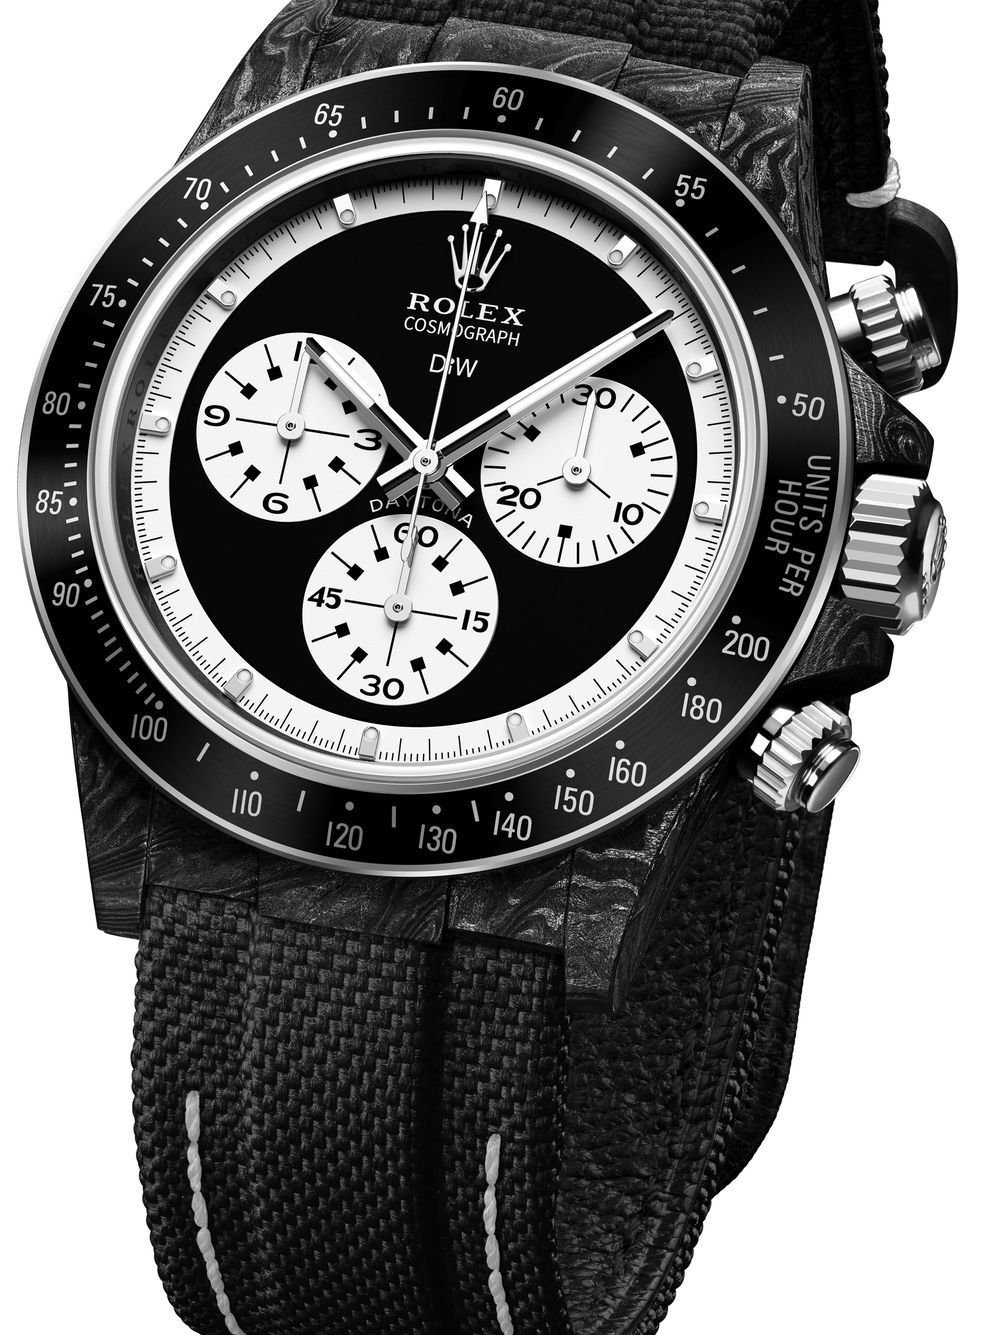 Image 2 of DiW (Designa Individual Watches) reloj Cosmograph Daytona Paul Newman de 40mm